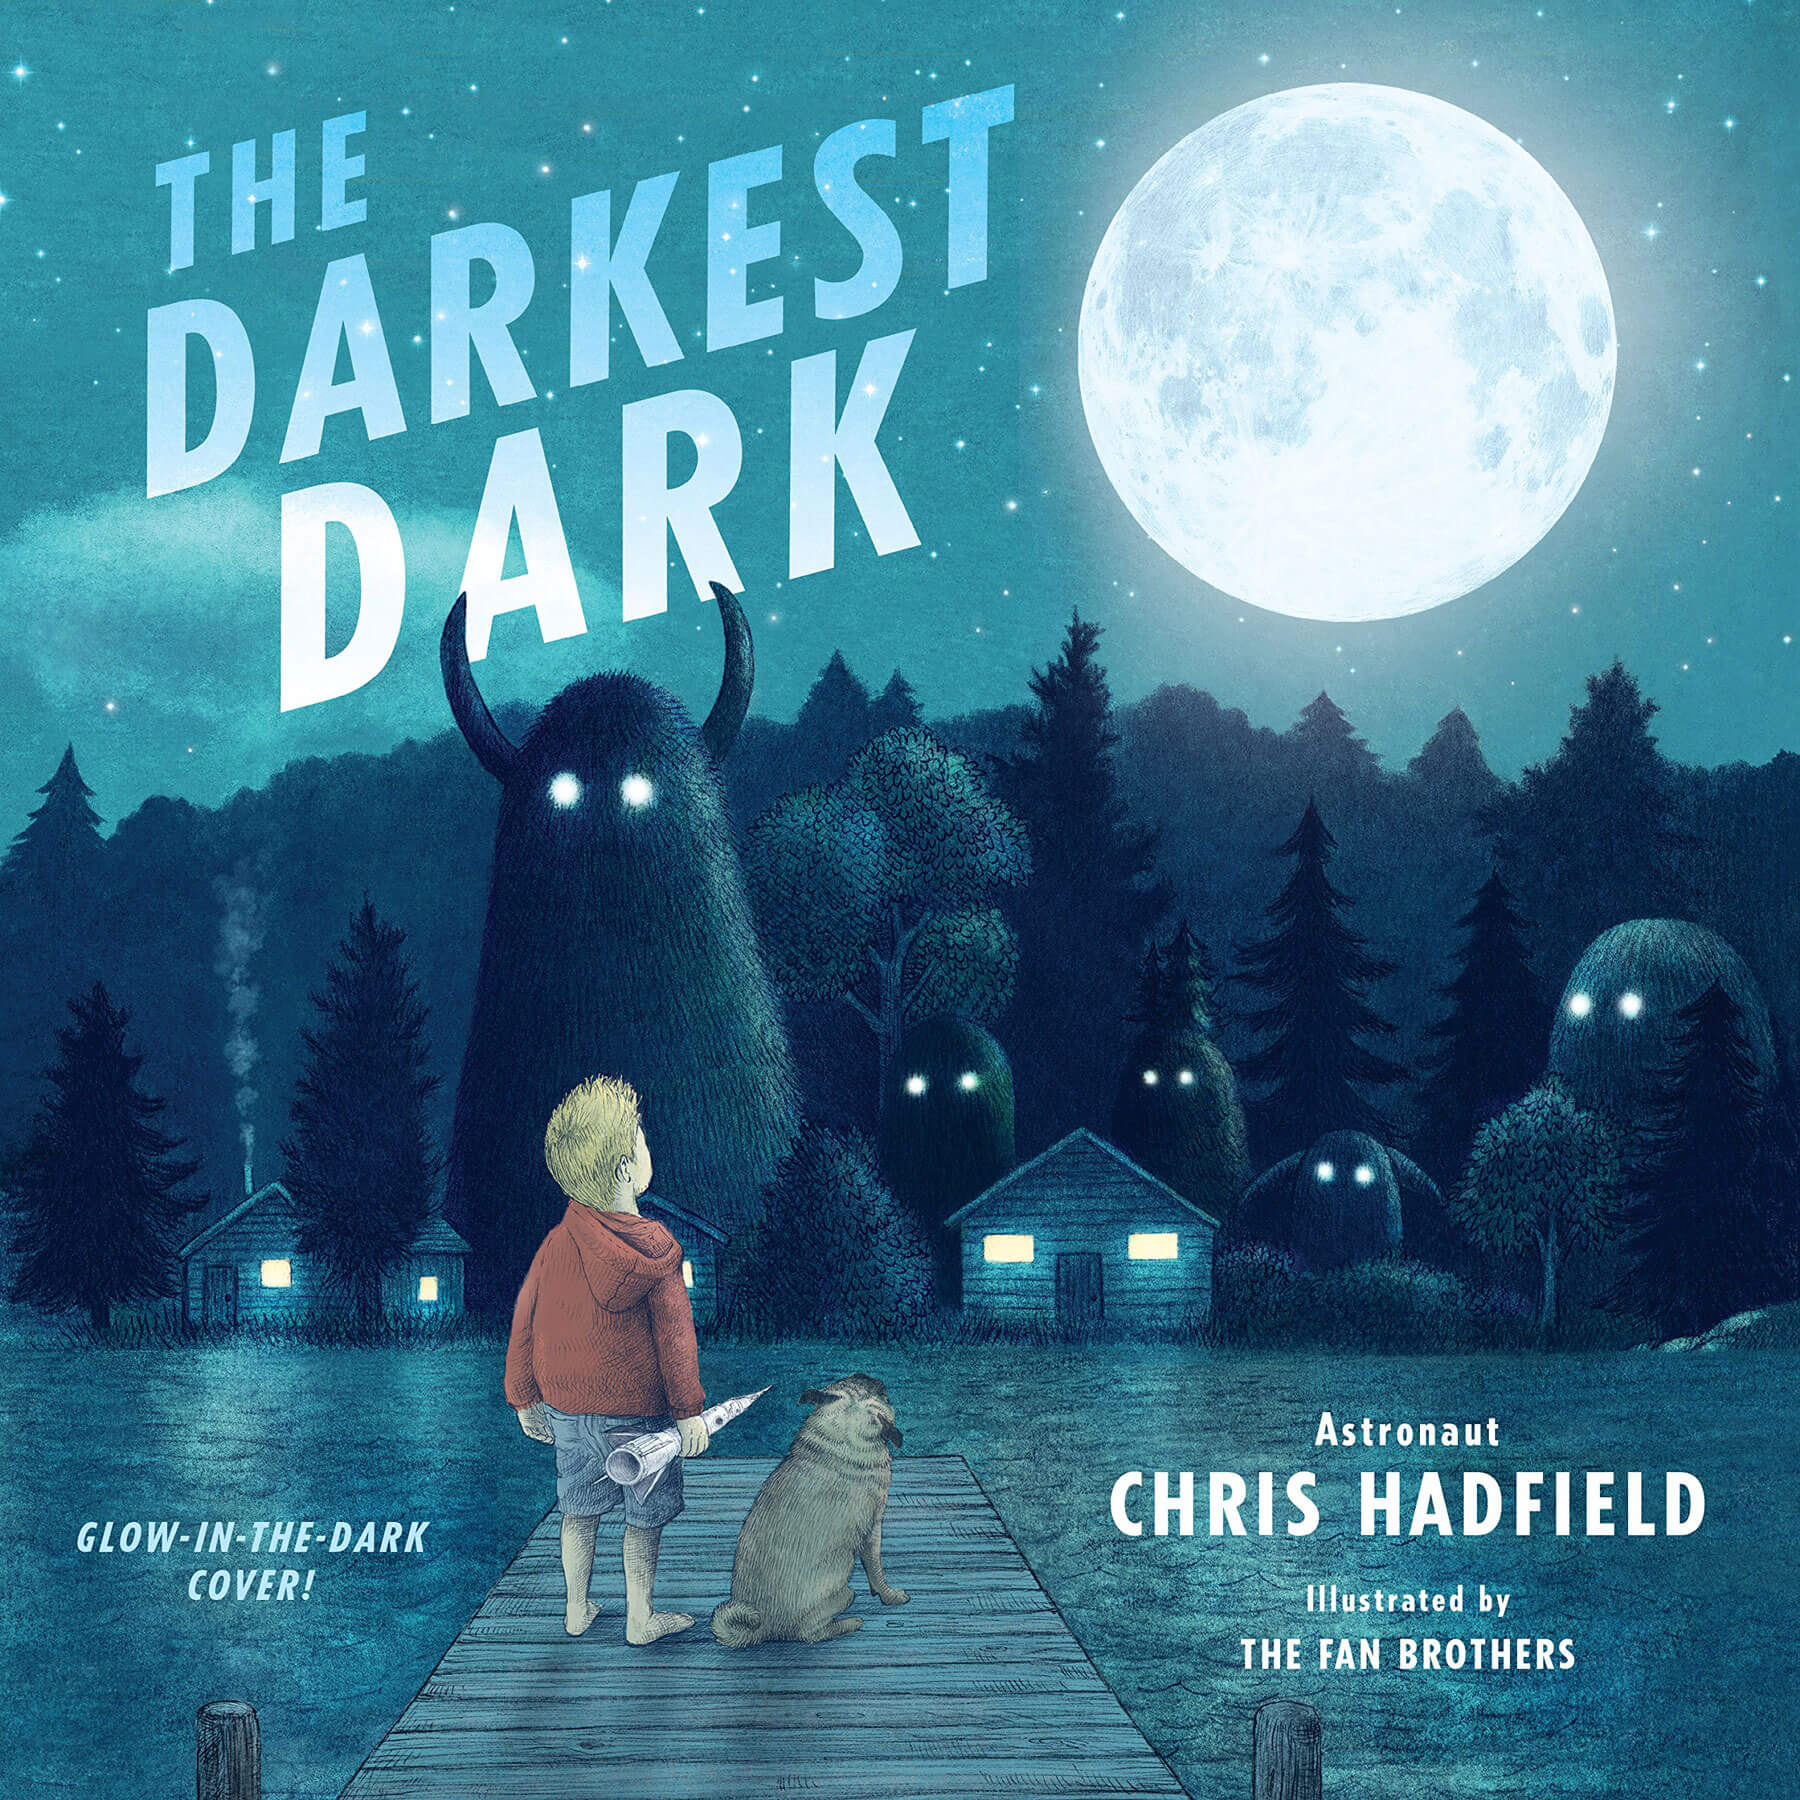 Cover art from Chris Hadfield's 'The Darkest Dark' - Glow in the Dark Version